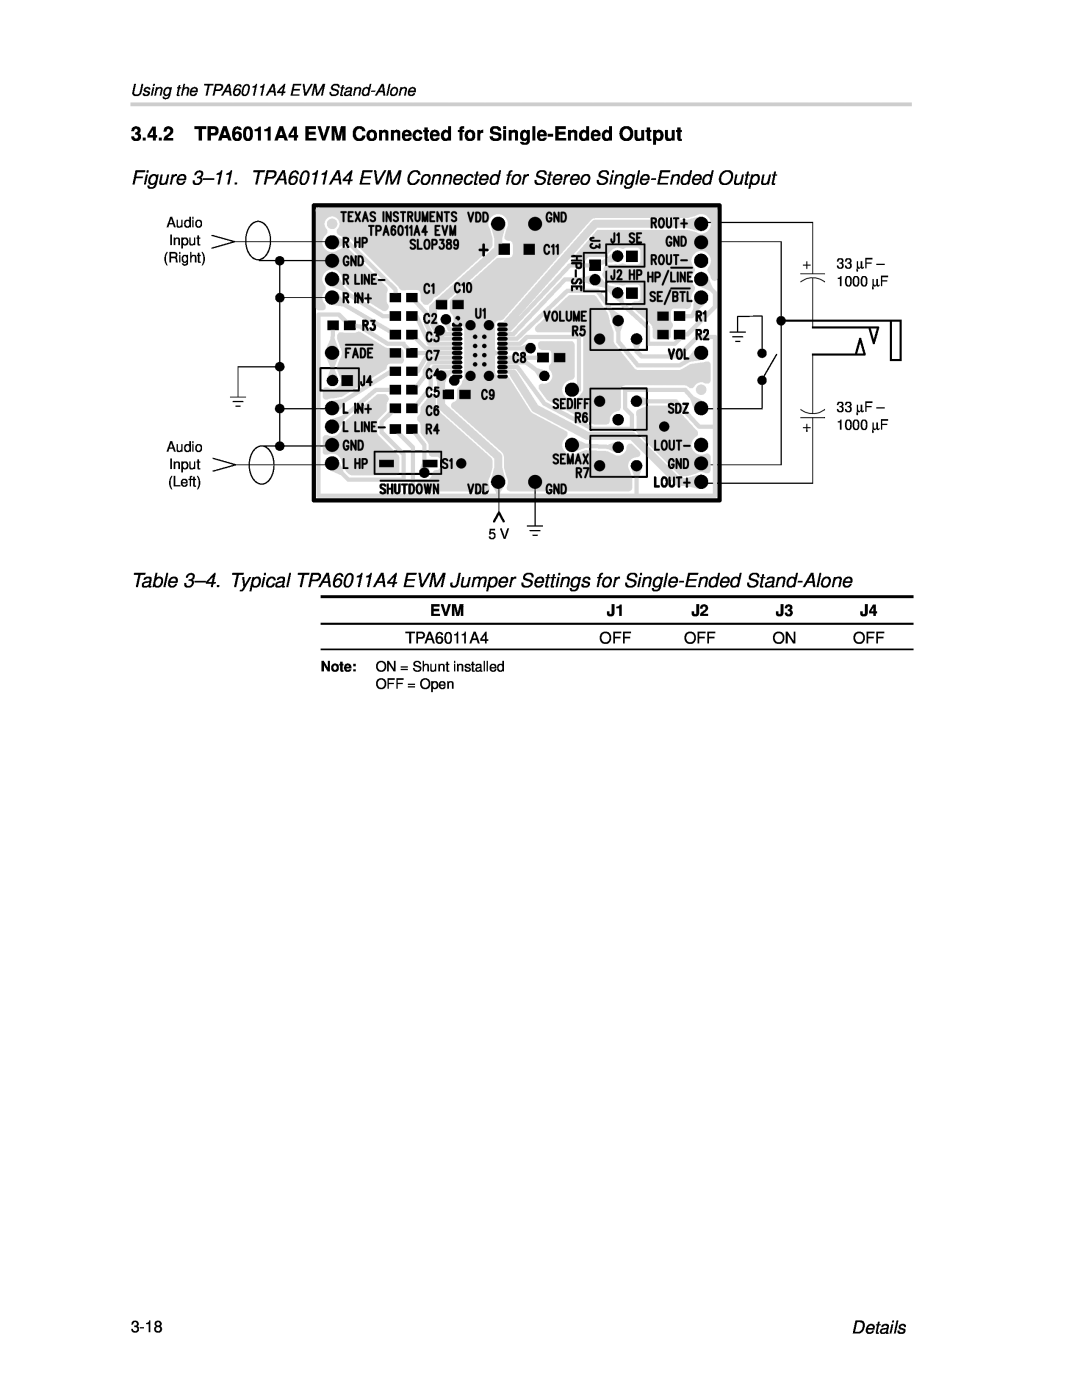 Texas Instruments SLOU121 manual Audio Input Right Audio Input Left, 33 ∝ F – + 1000 ∝ F, 3-18 